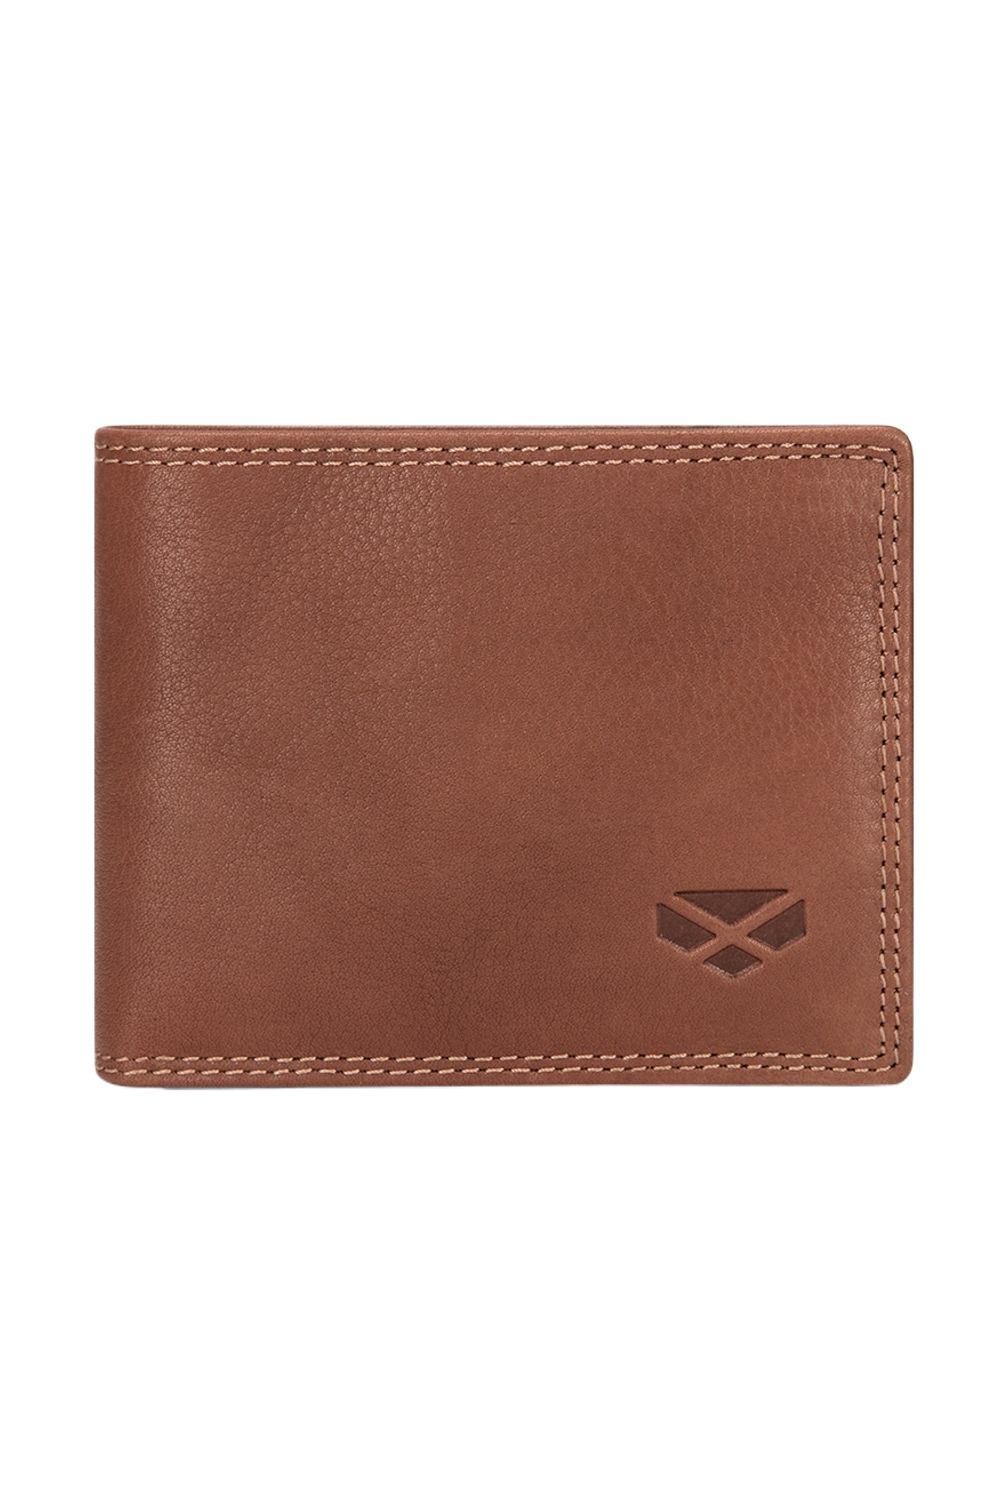 Hoggs of Fife Monarch Leather Credit Card Wallet in Hazelnut 